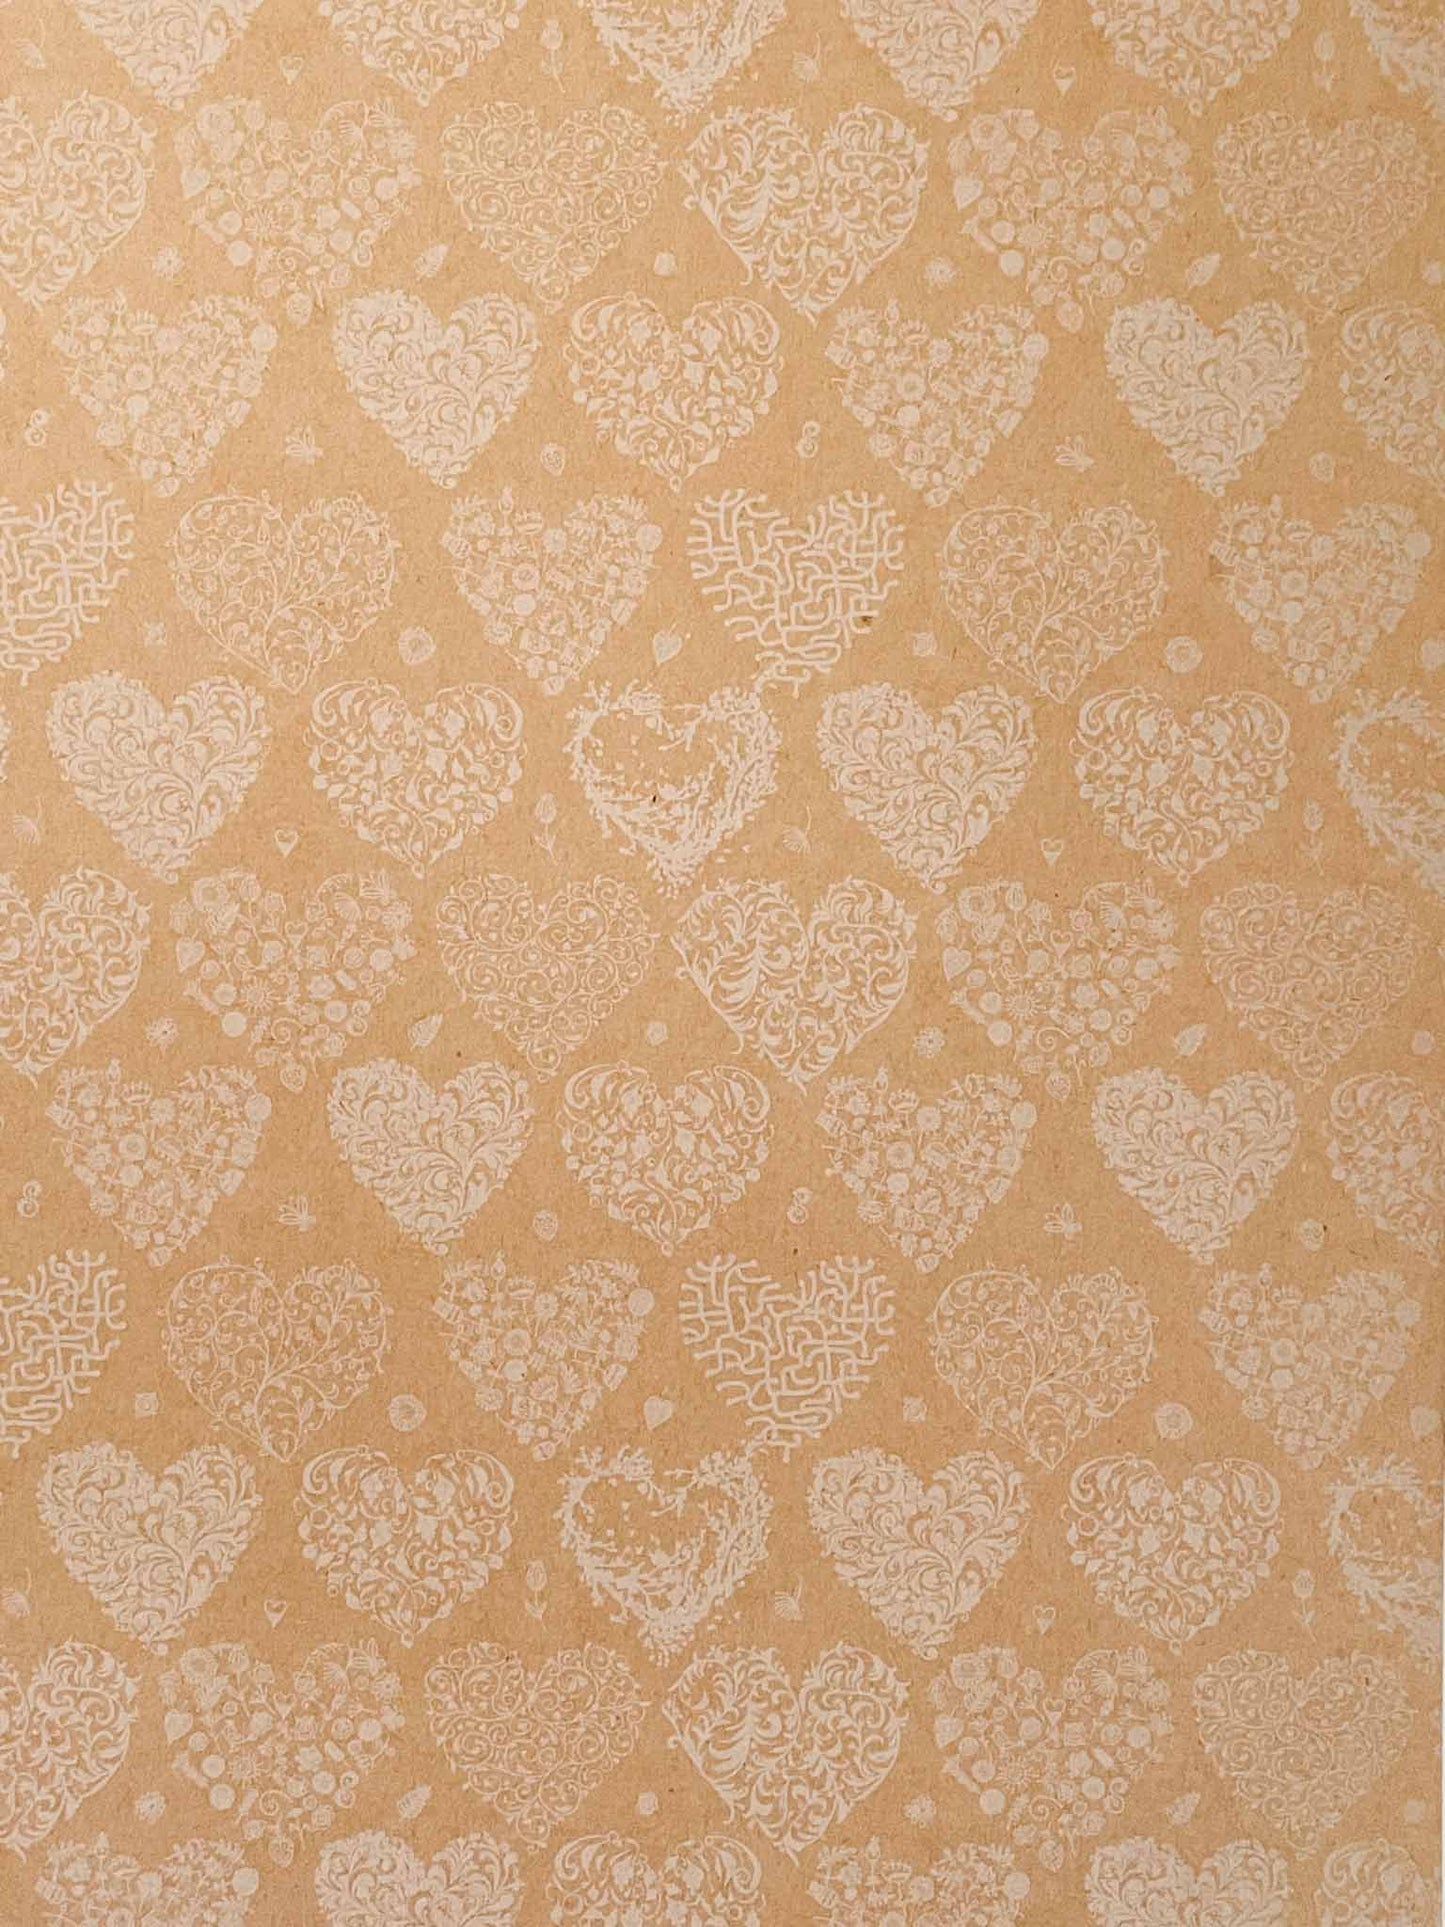 Hearts on Kraft Paper  ImagineDIY   